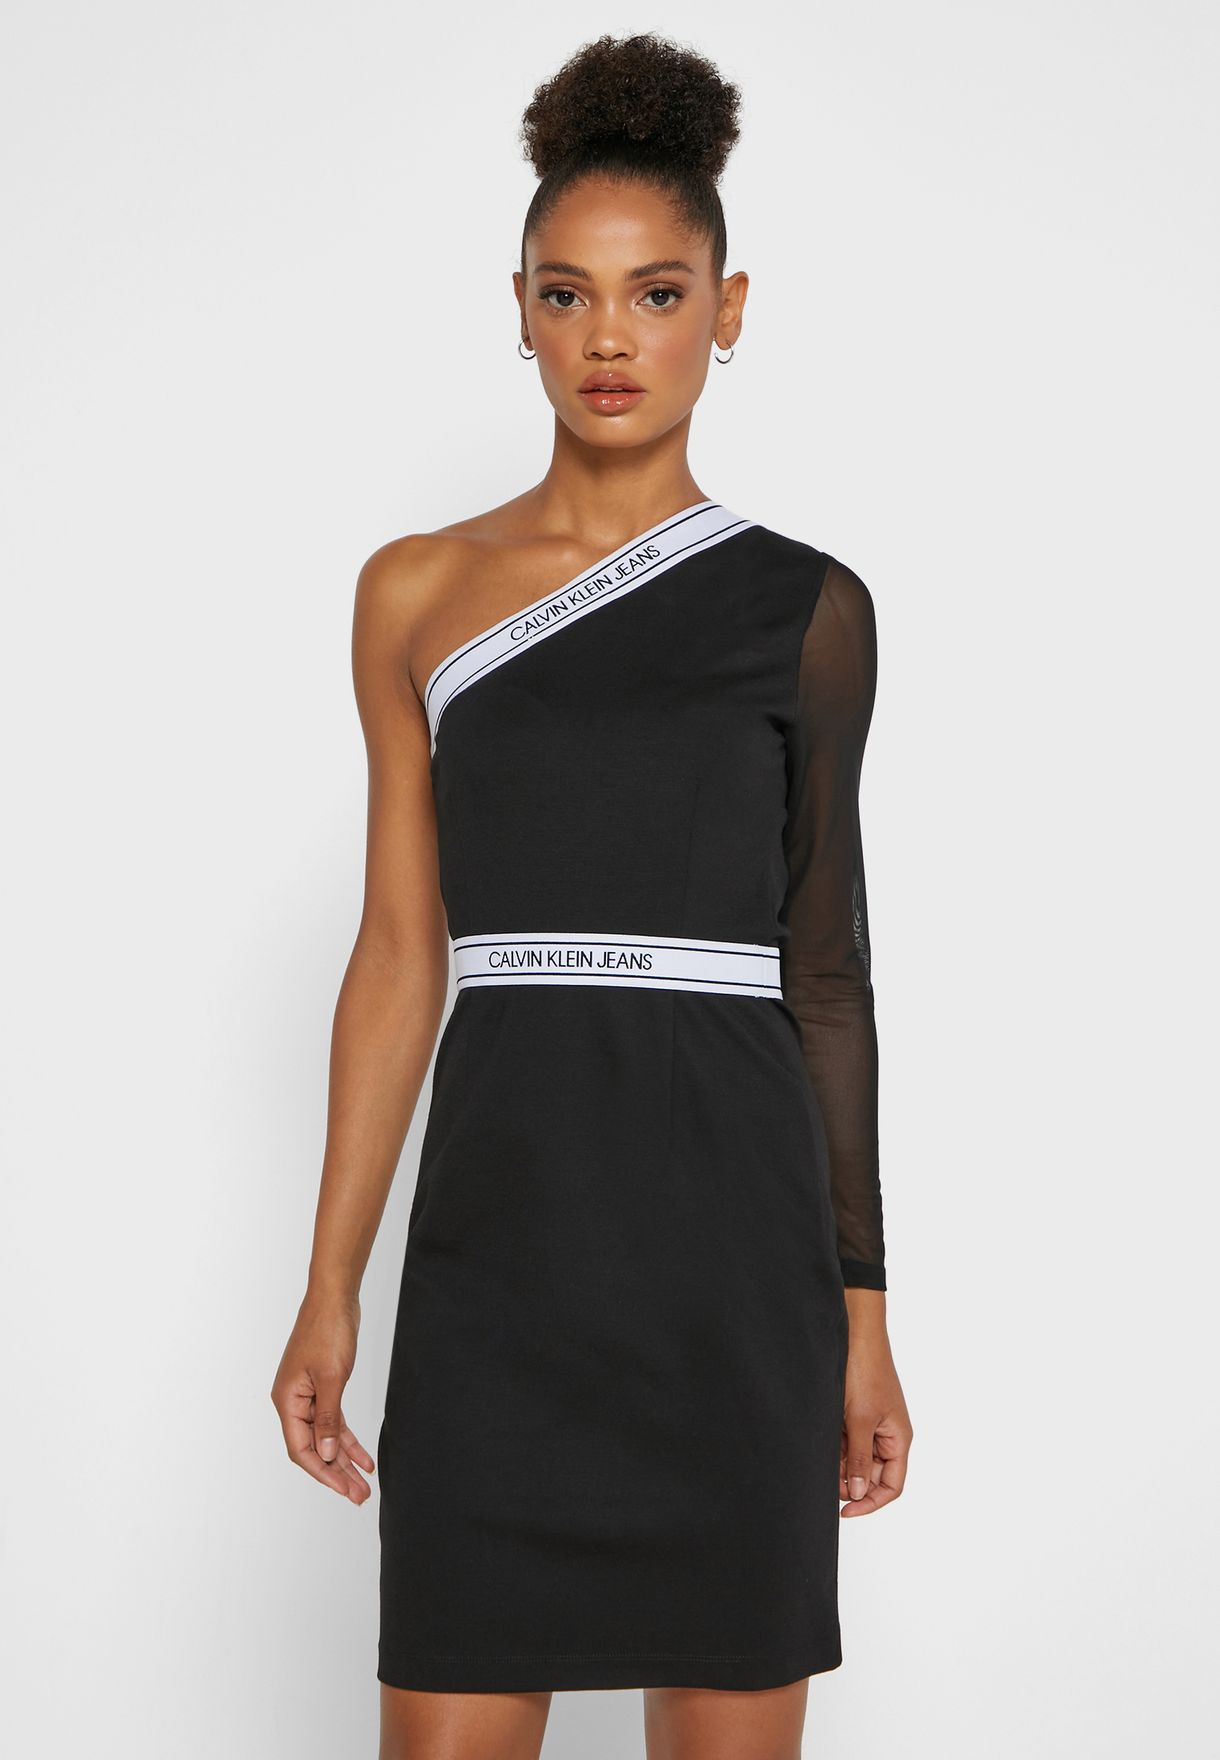 Calvin Klein Black One Shoulder Dress